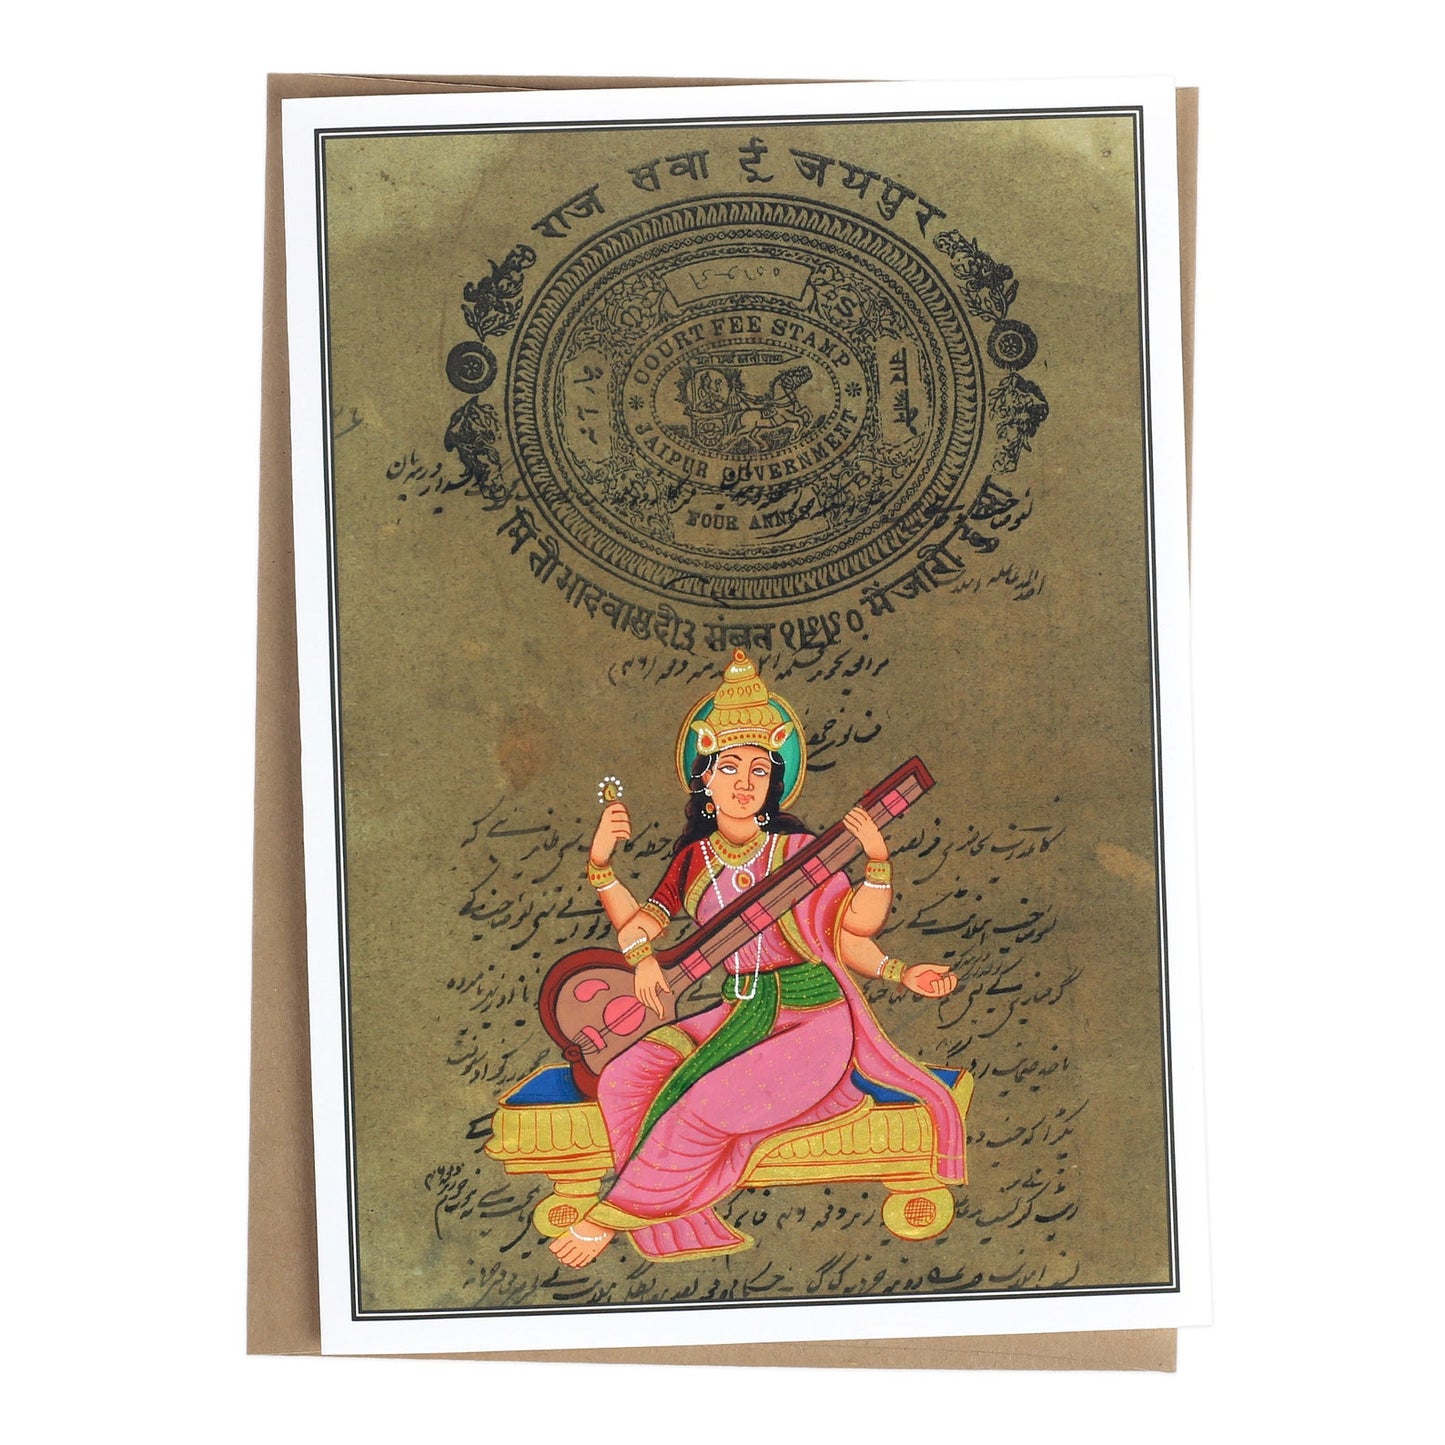 Saraswati Greeting Card - Rajasthani Art Painting - Goddess Saraswati Seated  5"x7"